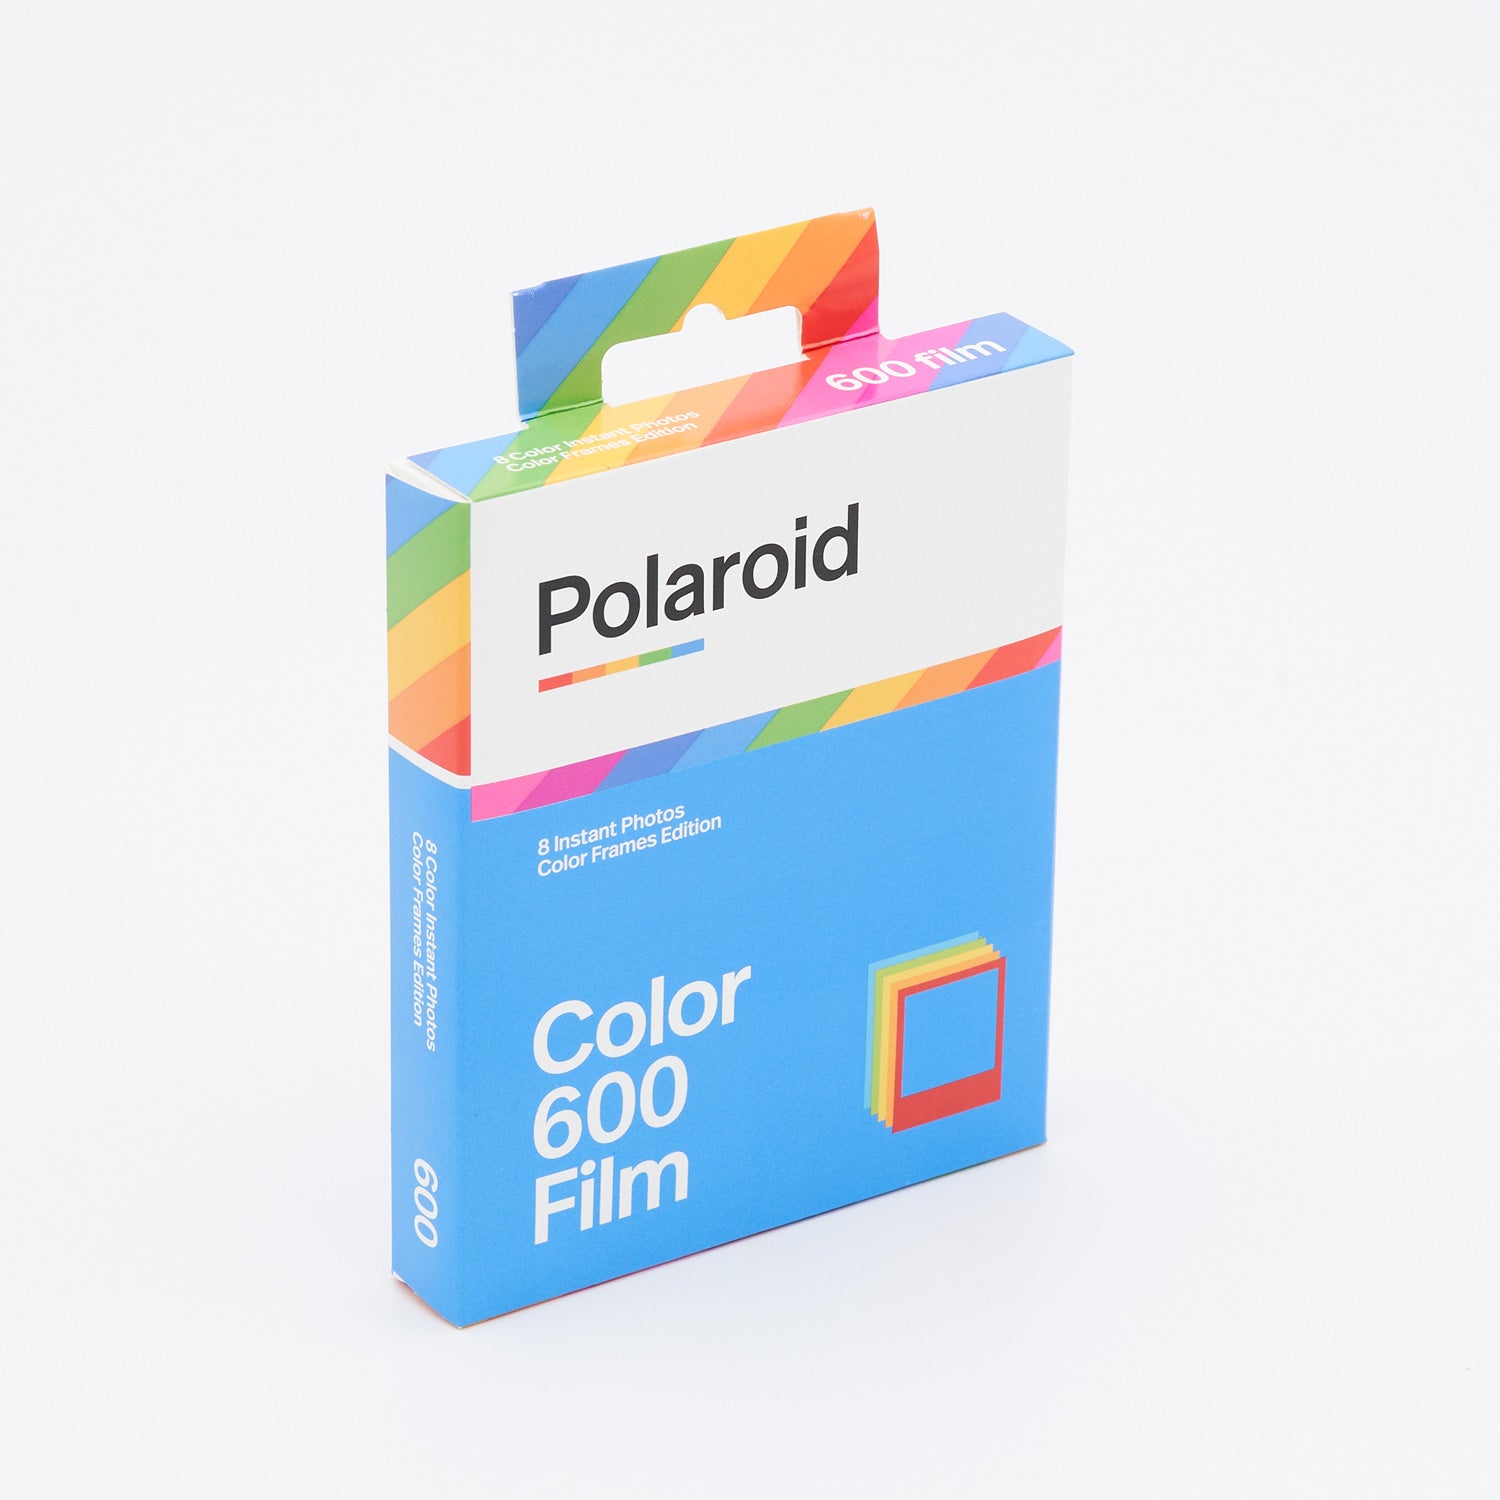 Polaroid 600 Color Farb-Film, Color Frame